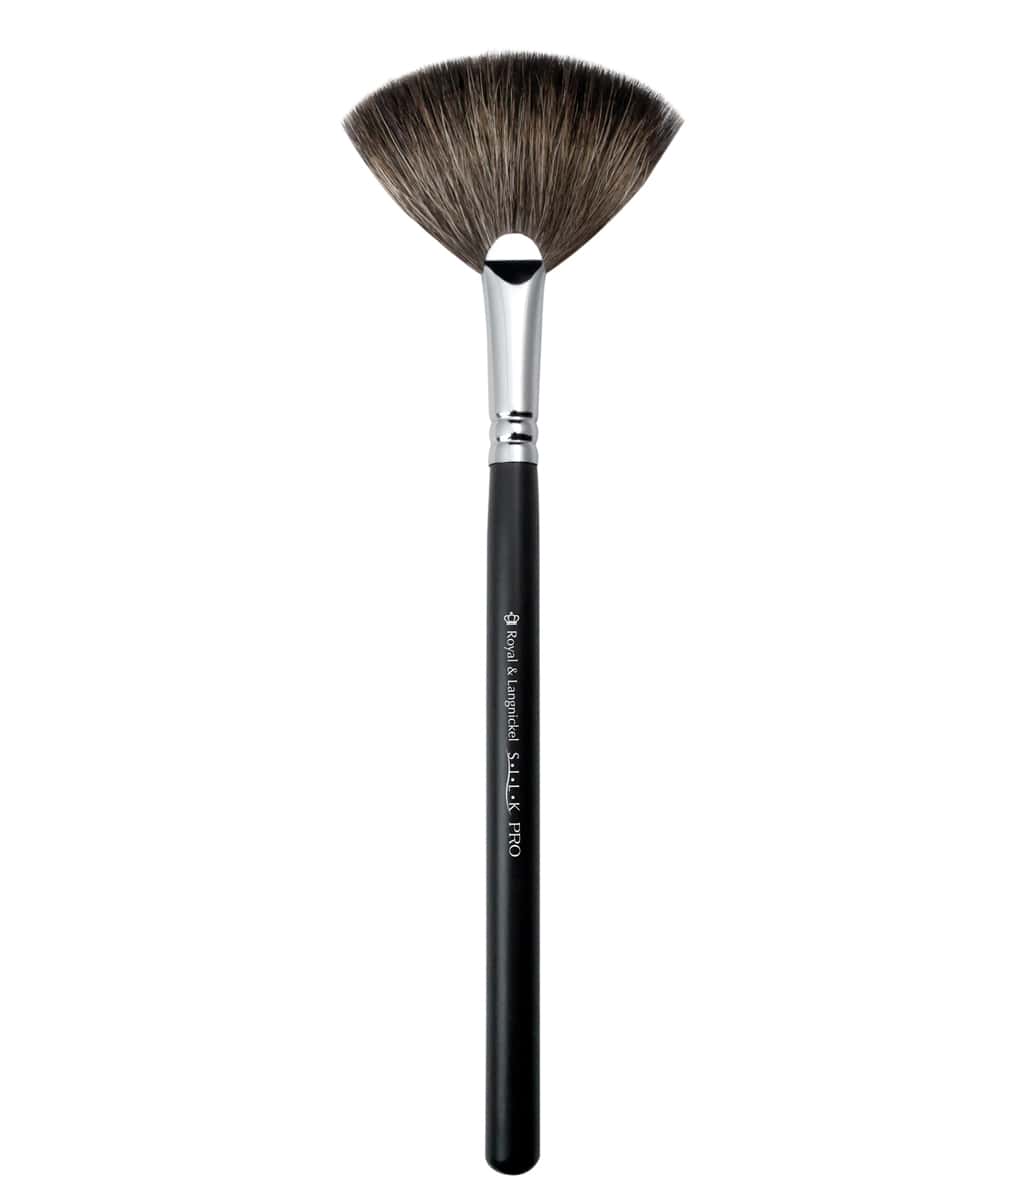 Fan Brush Makeup  Graftobian Professional Makeup – Graftobian Make-Up  Company